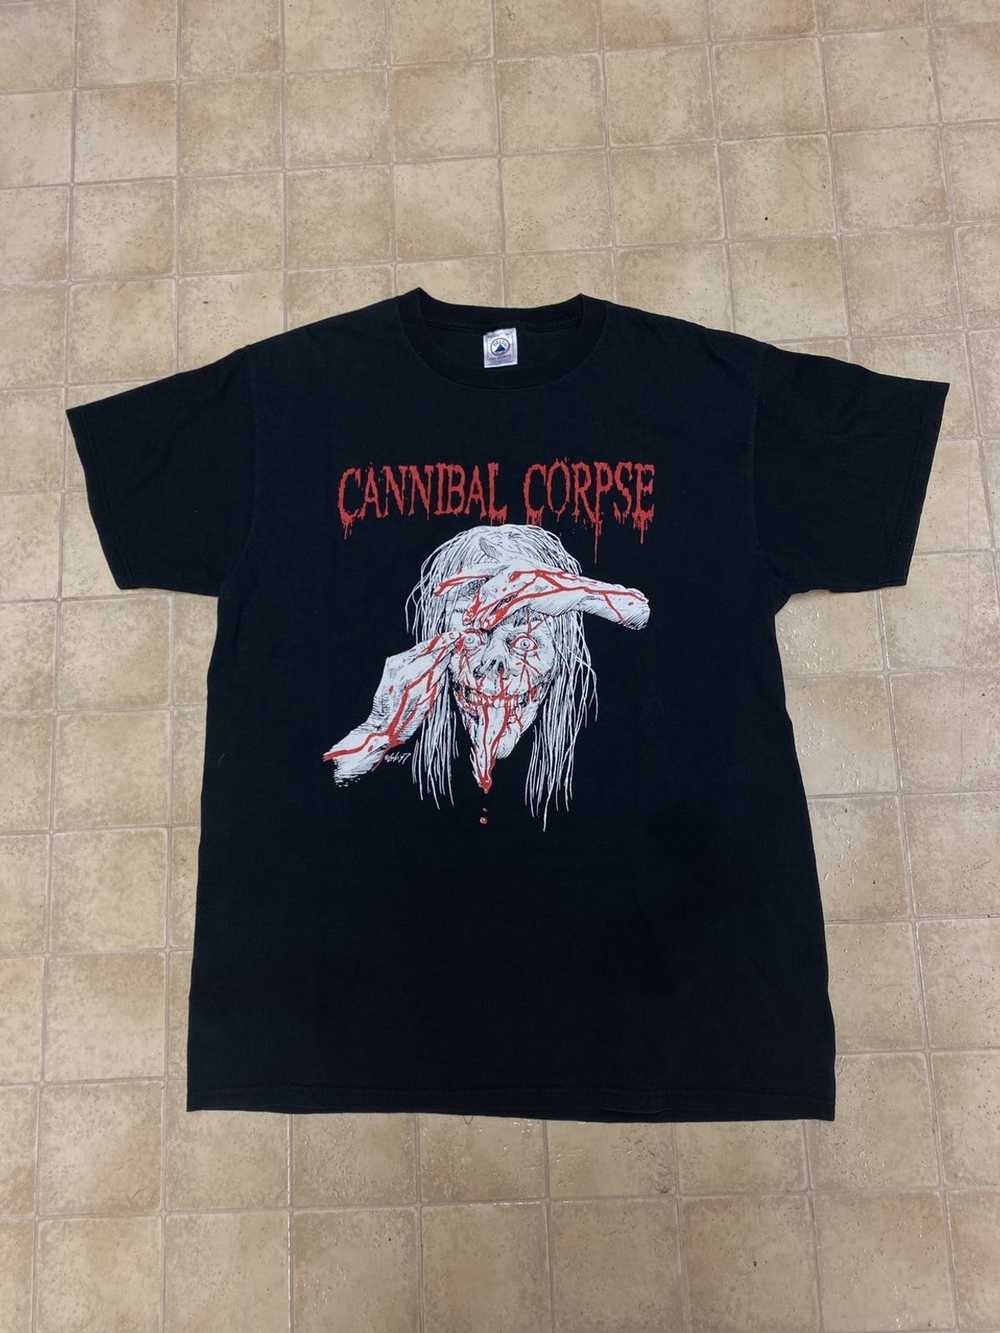 Vintage 1997 cannibal corpse tee - image 4